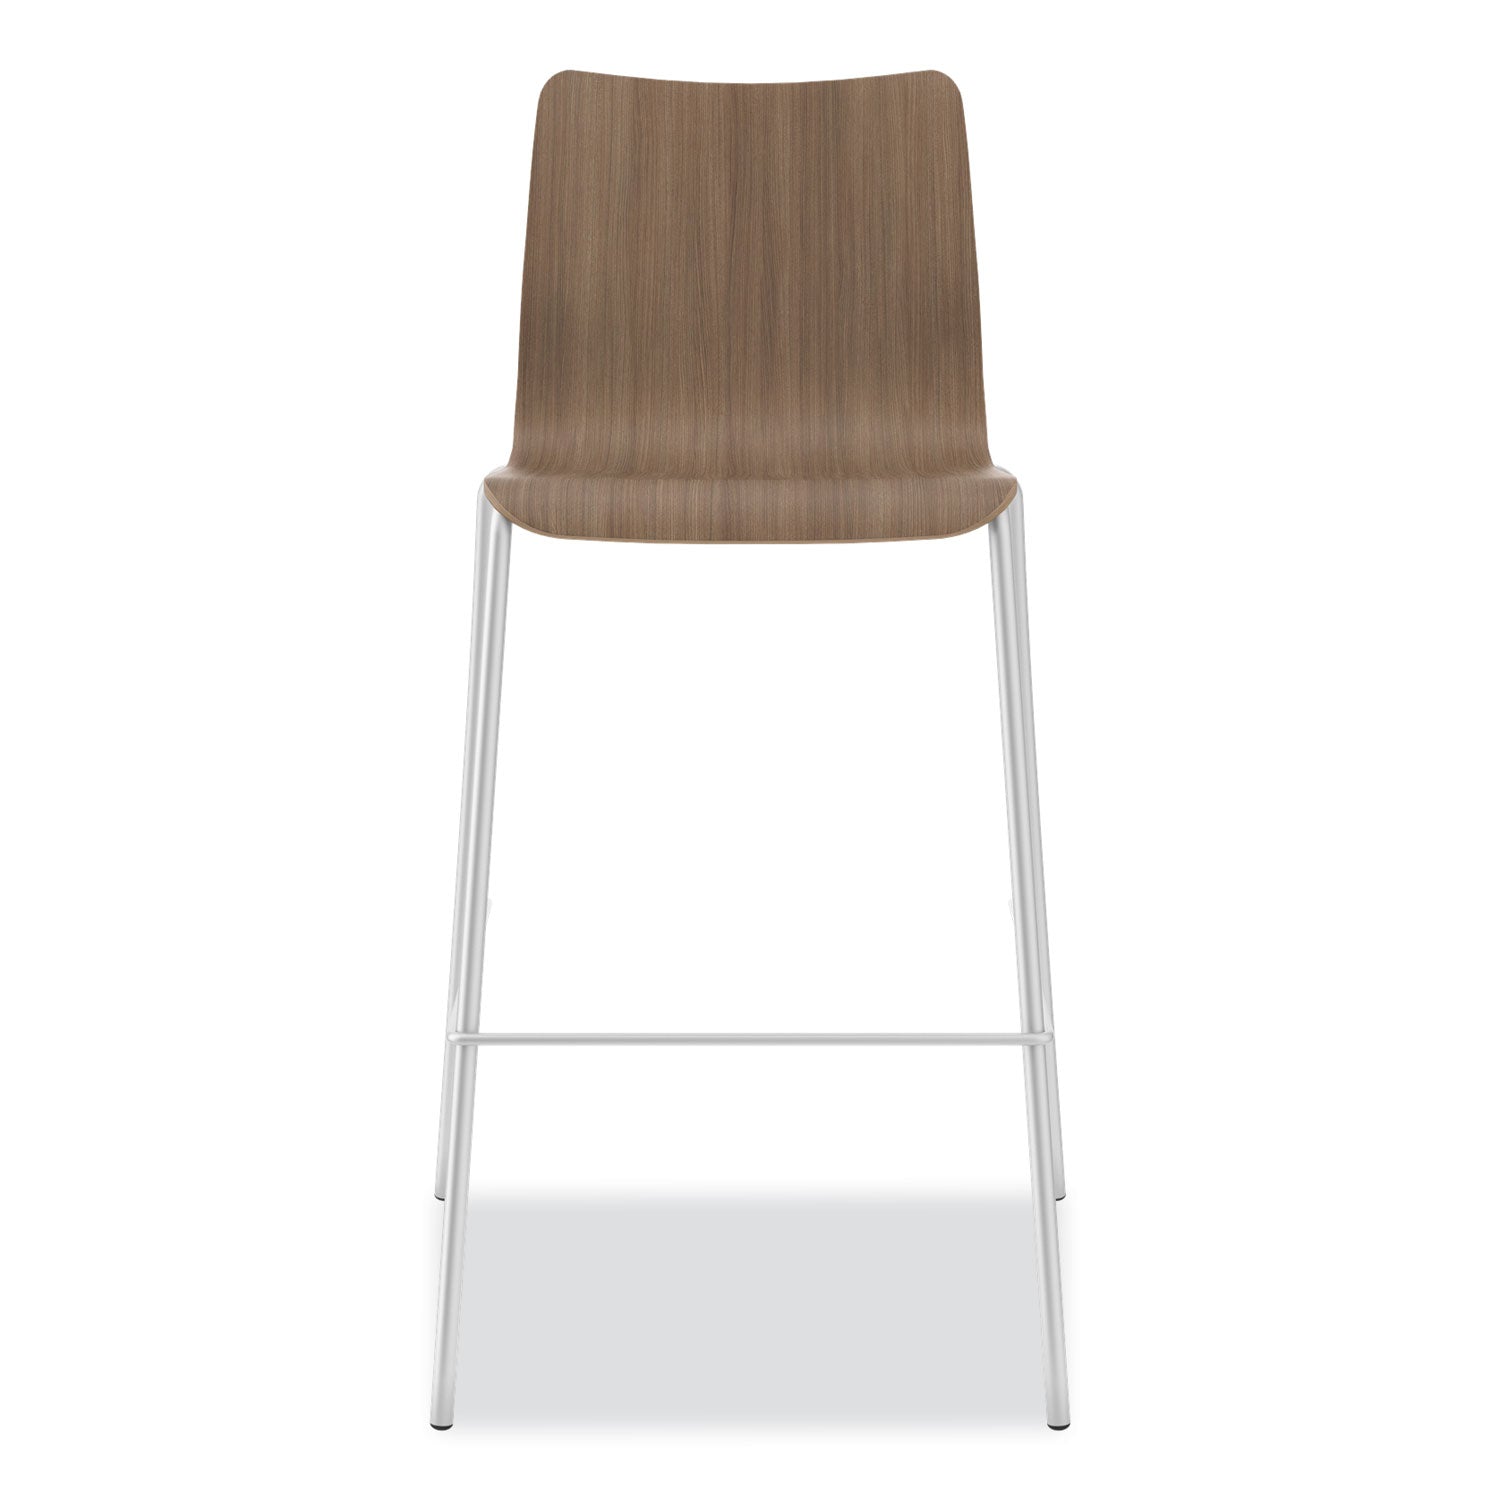 ruck-laminate-task-stool-supports-up-to-300-lb-30-seat-height-pinnacle-seat-base-silver-frame_honruck5lpincp8 - 4